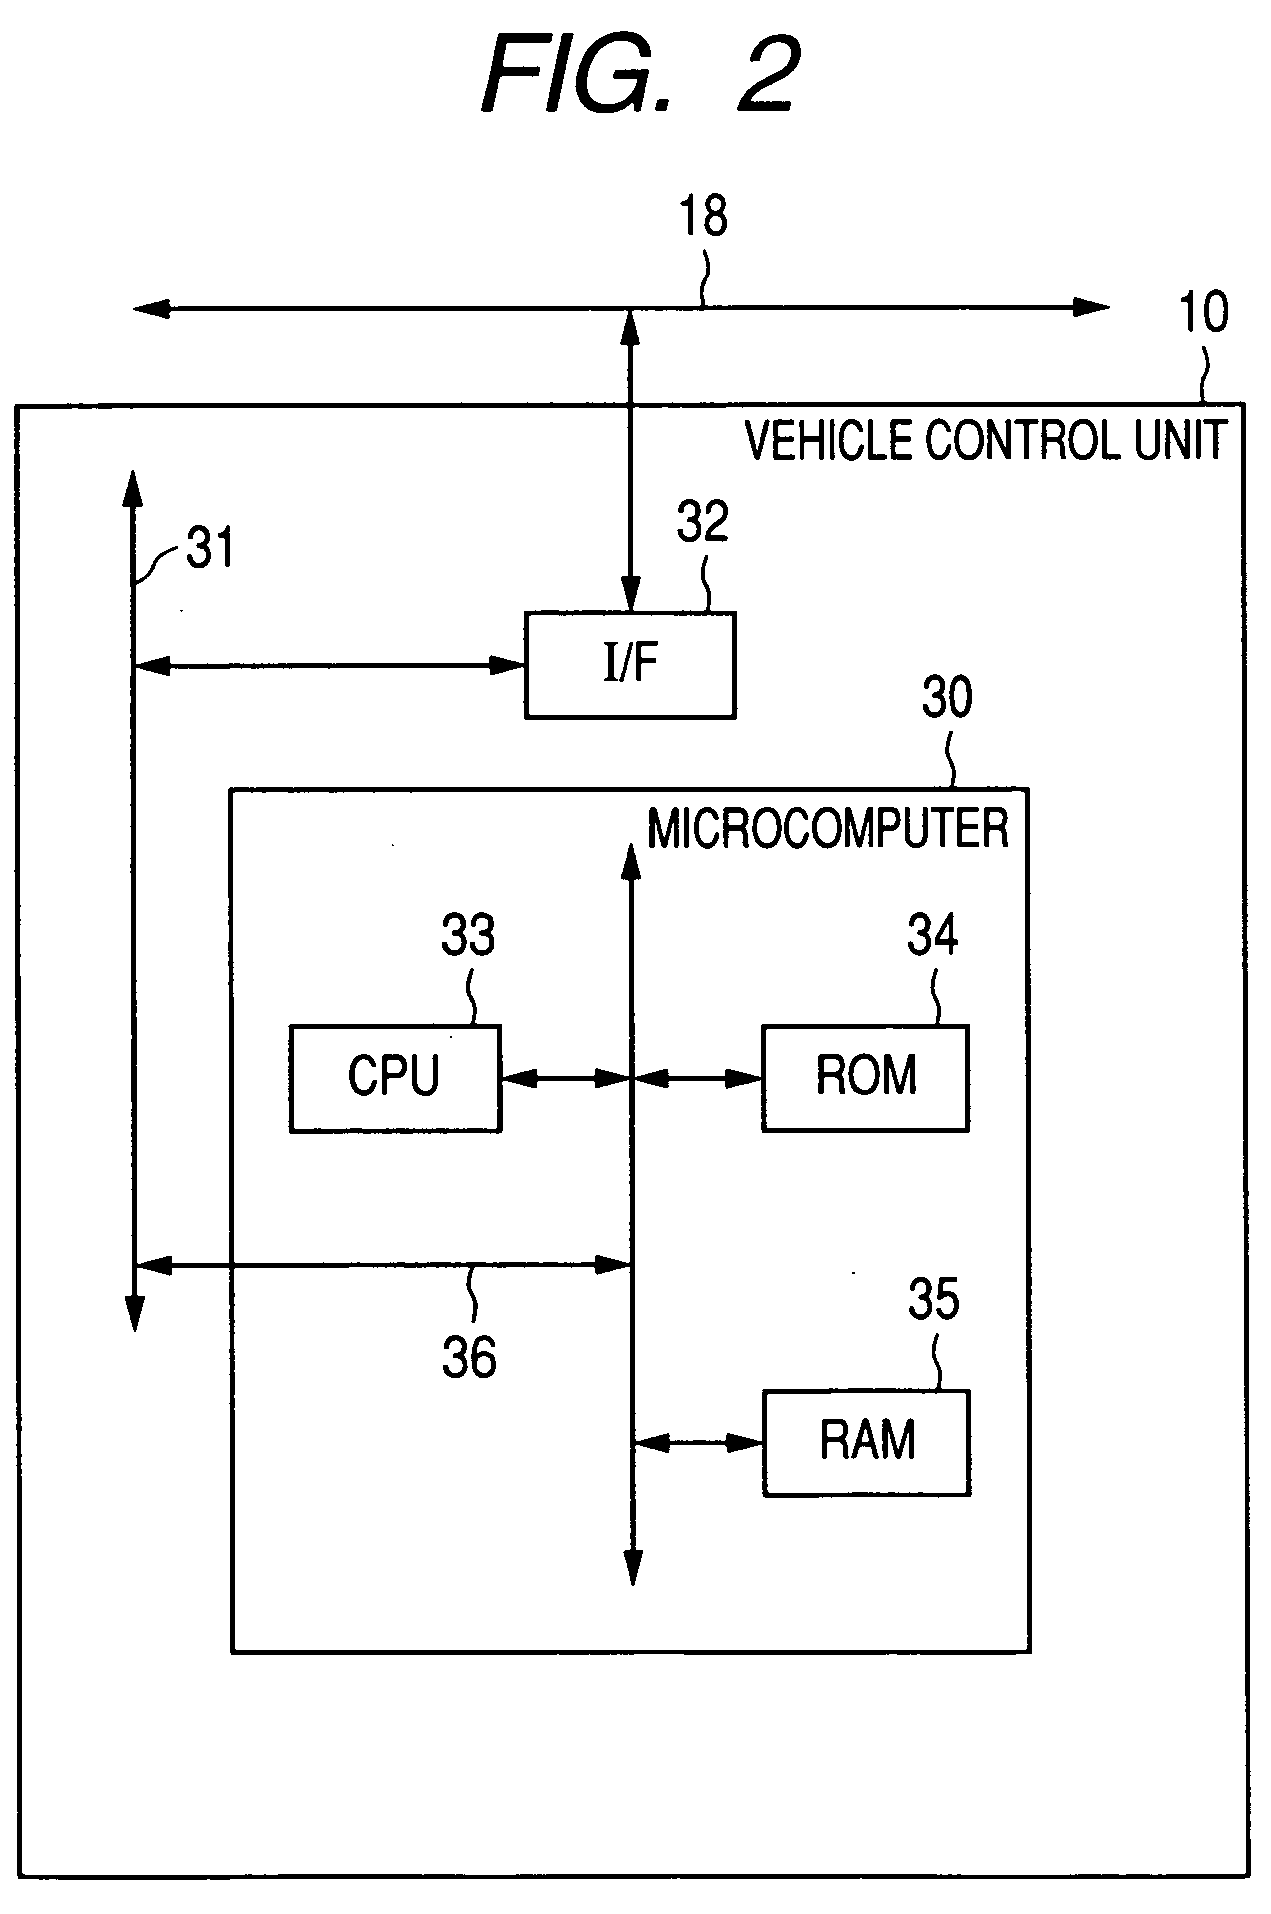 Vehicle control unit and vehicle control method